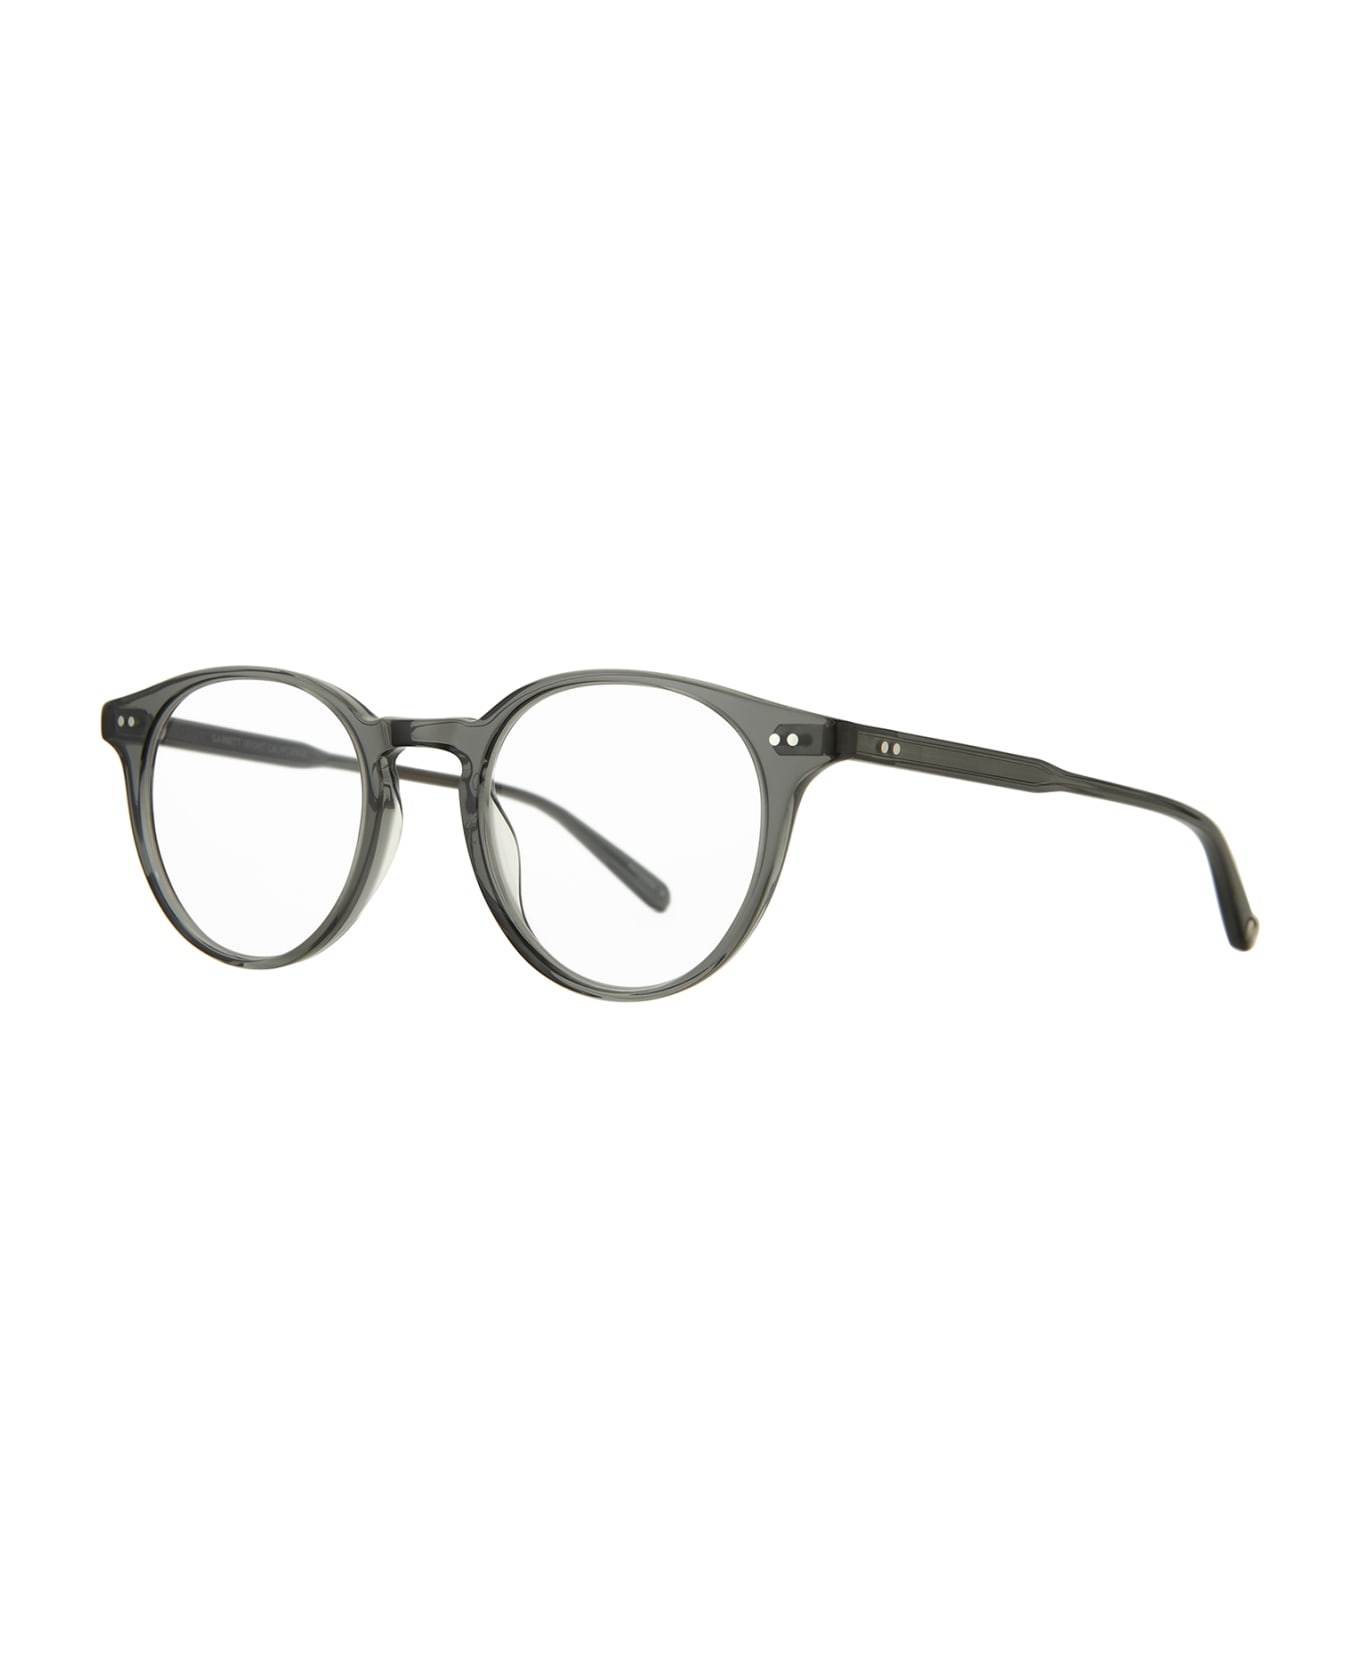 Garrett Leight Clune Sea Grey Glasses - Sea Grey アイウェア